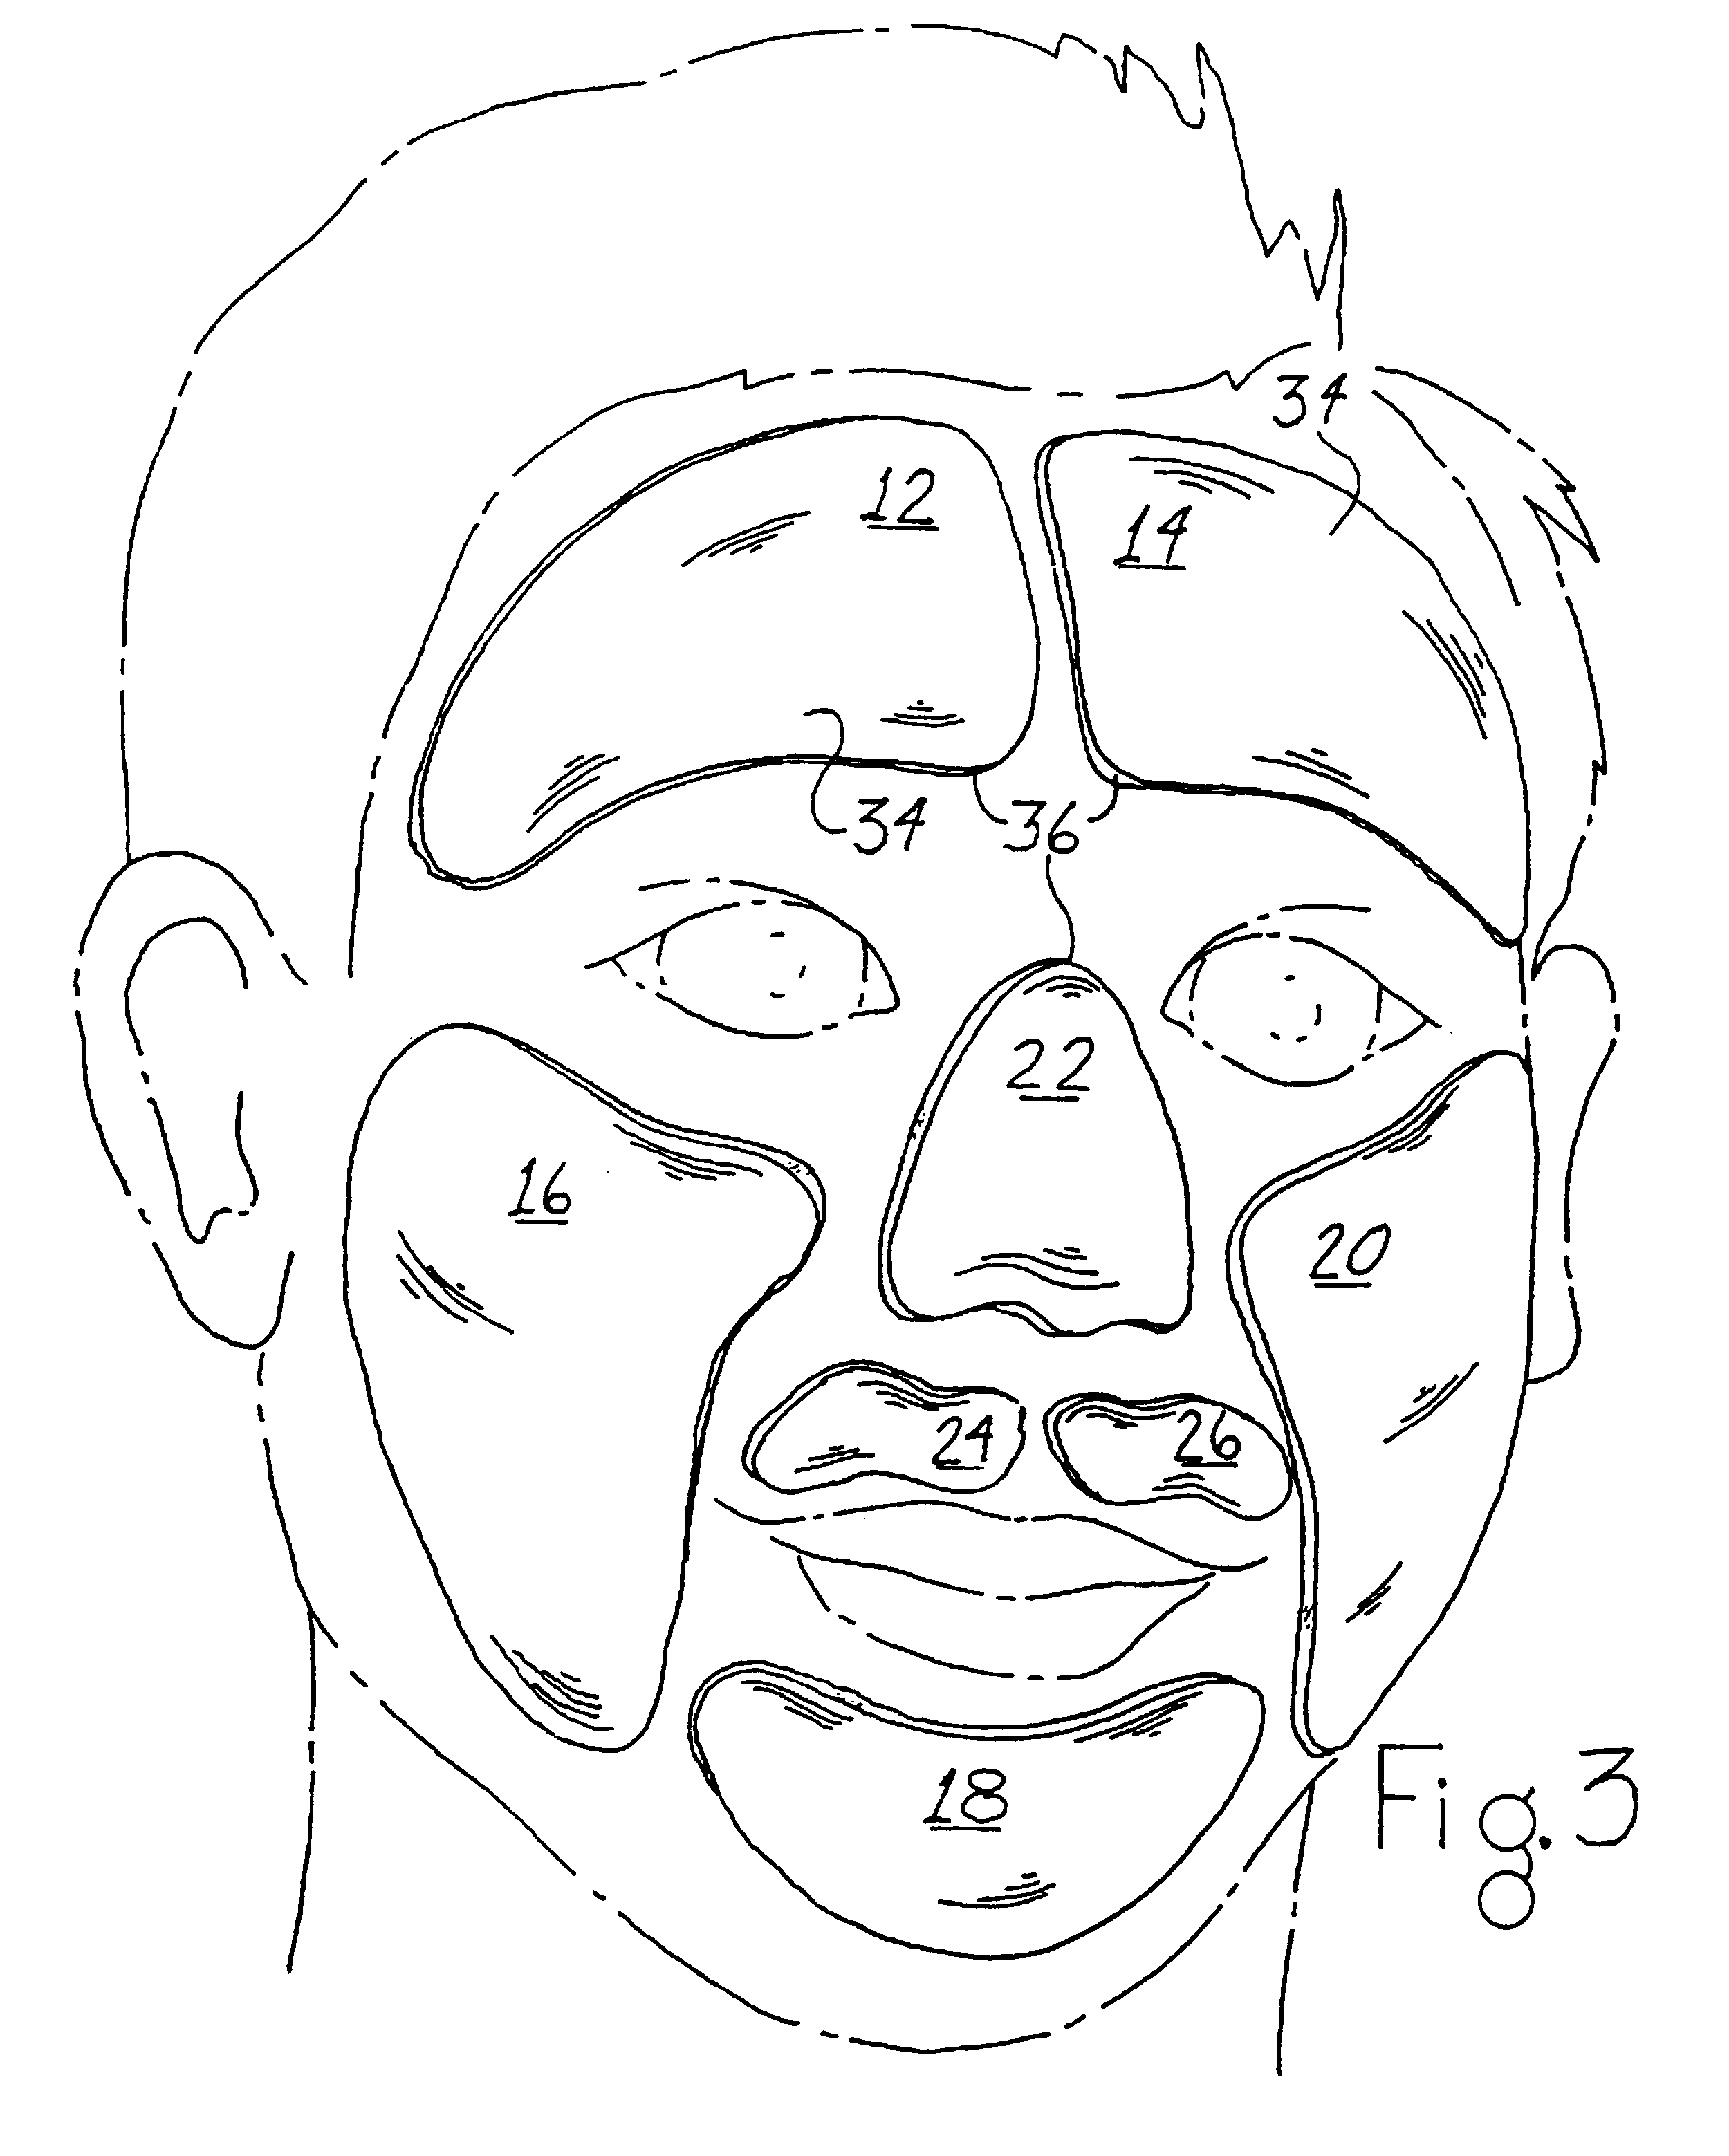 Segmental face mask